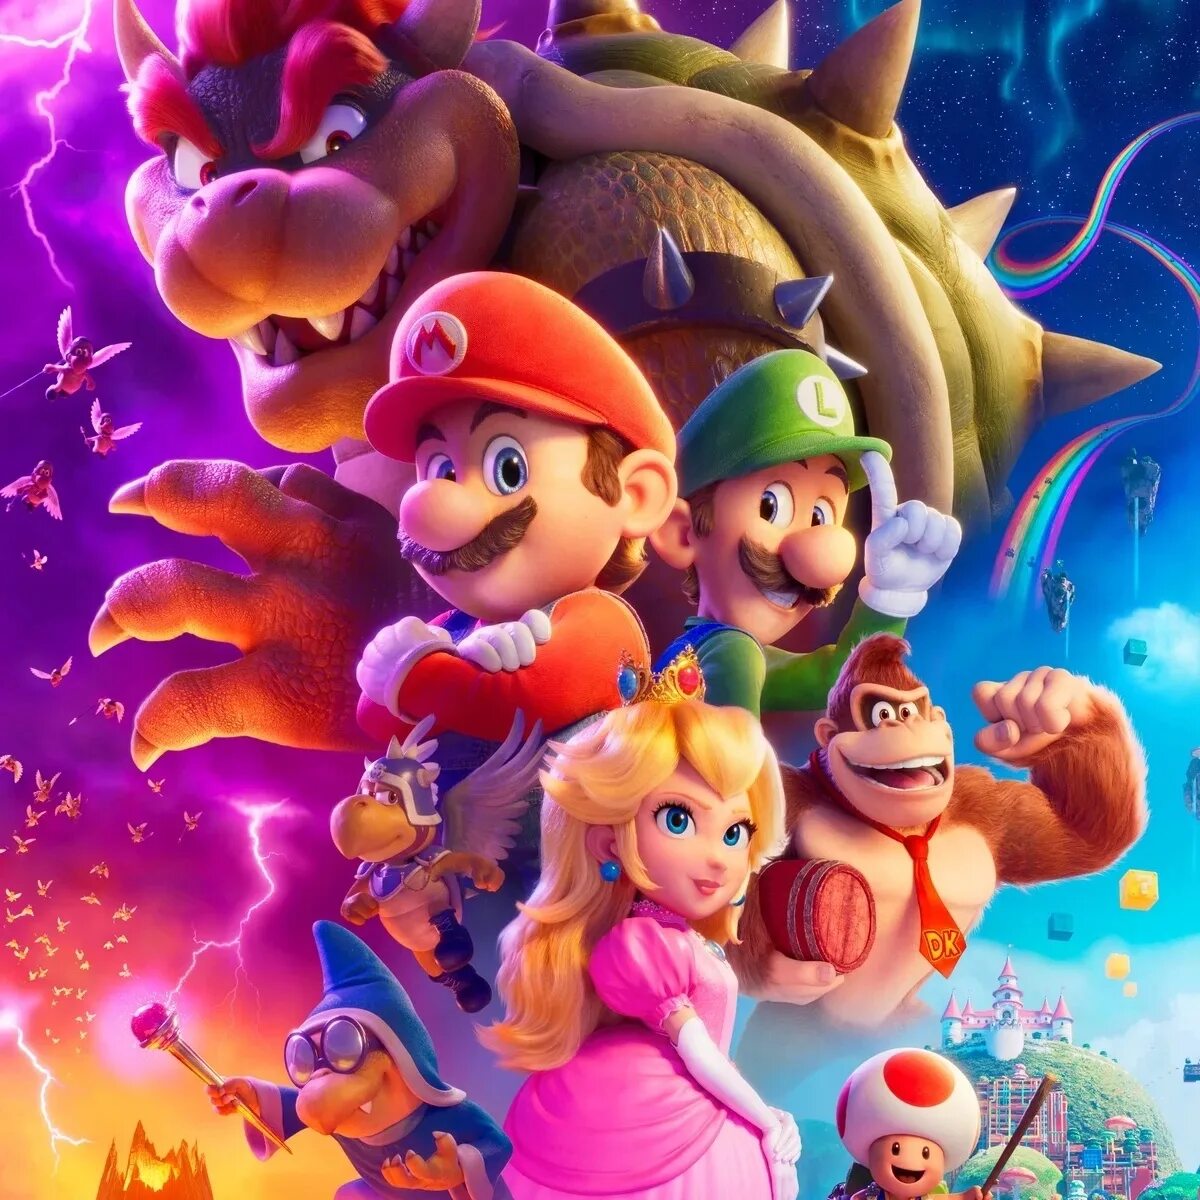 Mario bros 2023. Супер братья Марио. Супер братья Марио 2023.